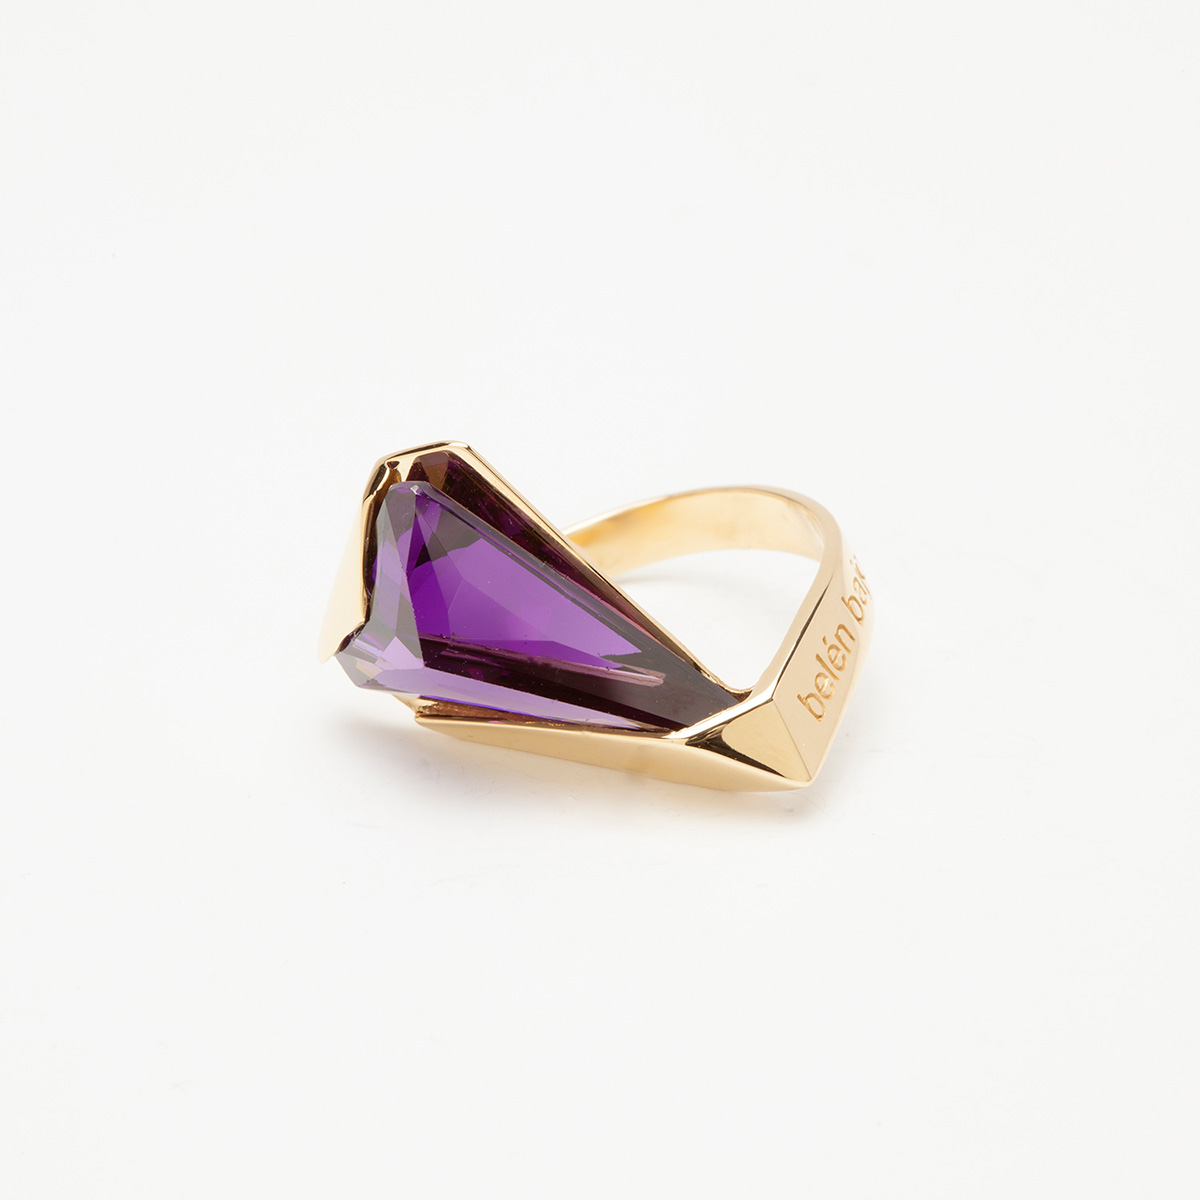 Kua handmade ring in 9k or 18k gold and violet hydrothermal quartz 3 designed by Belen Bajo